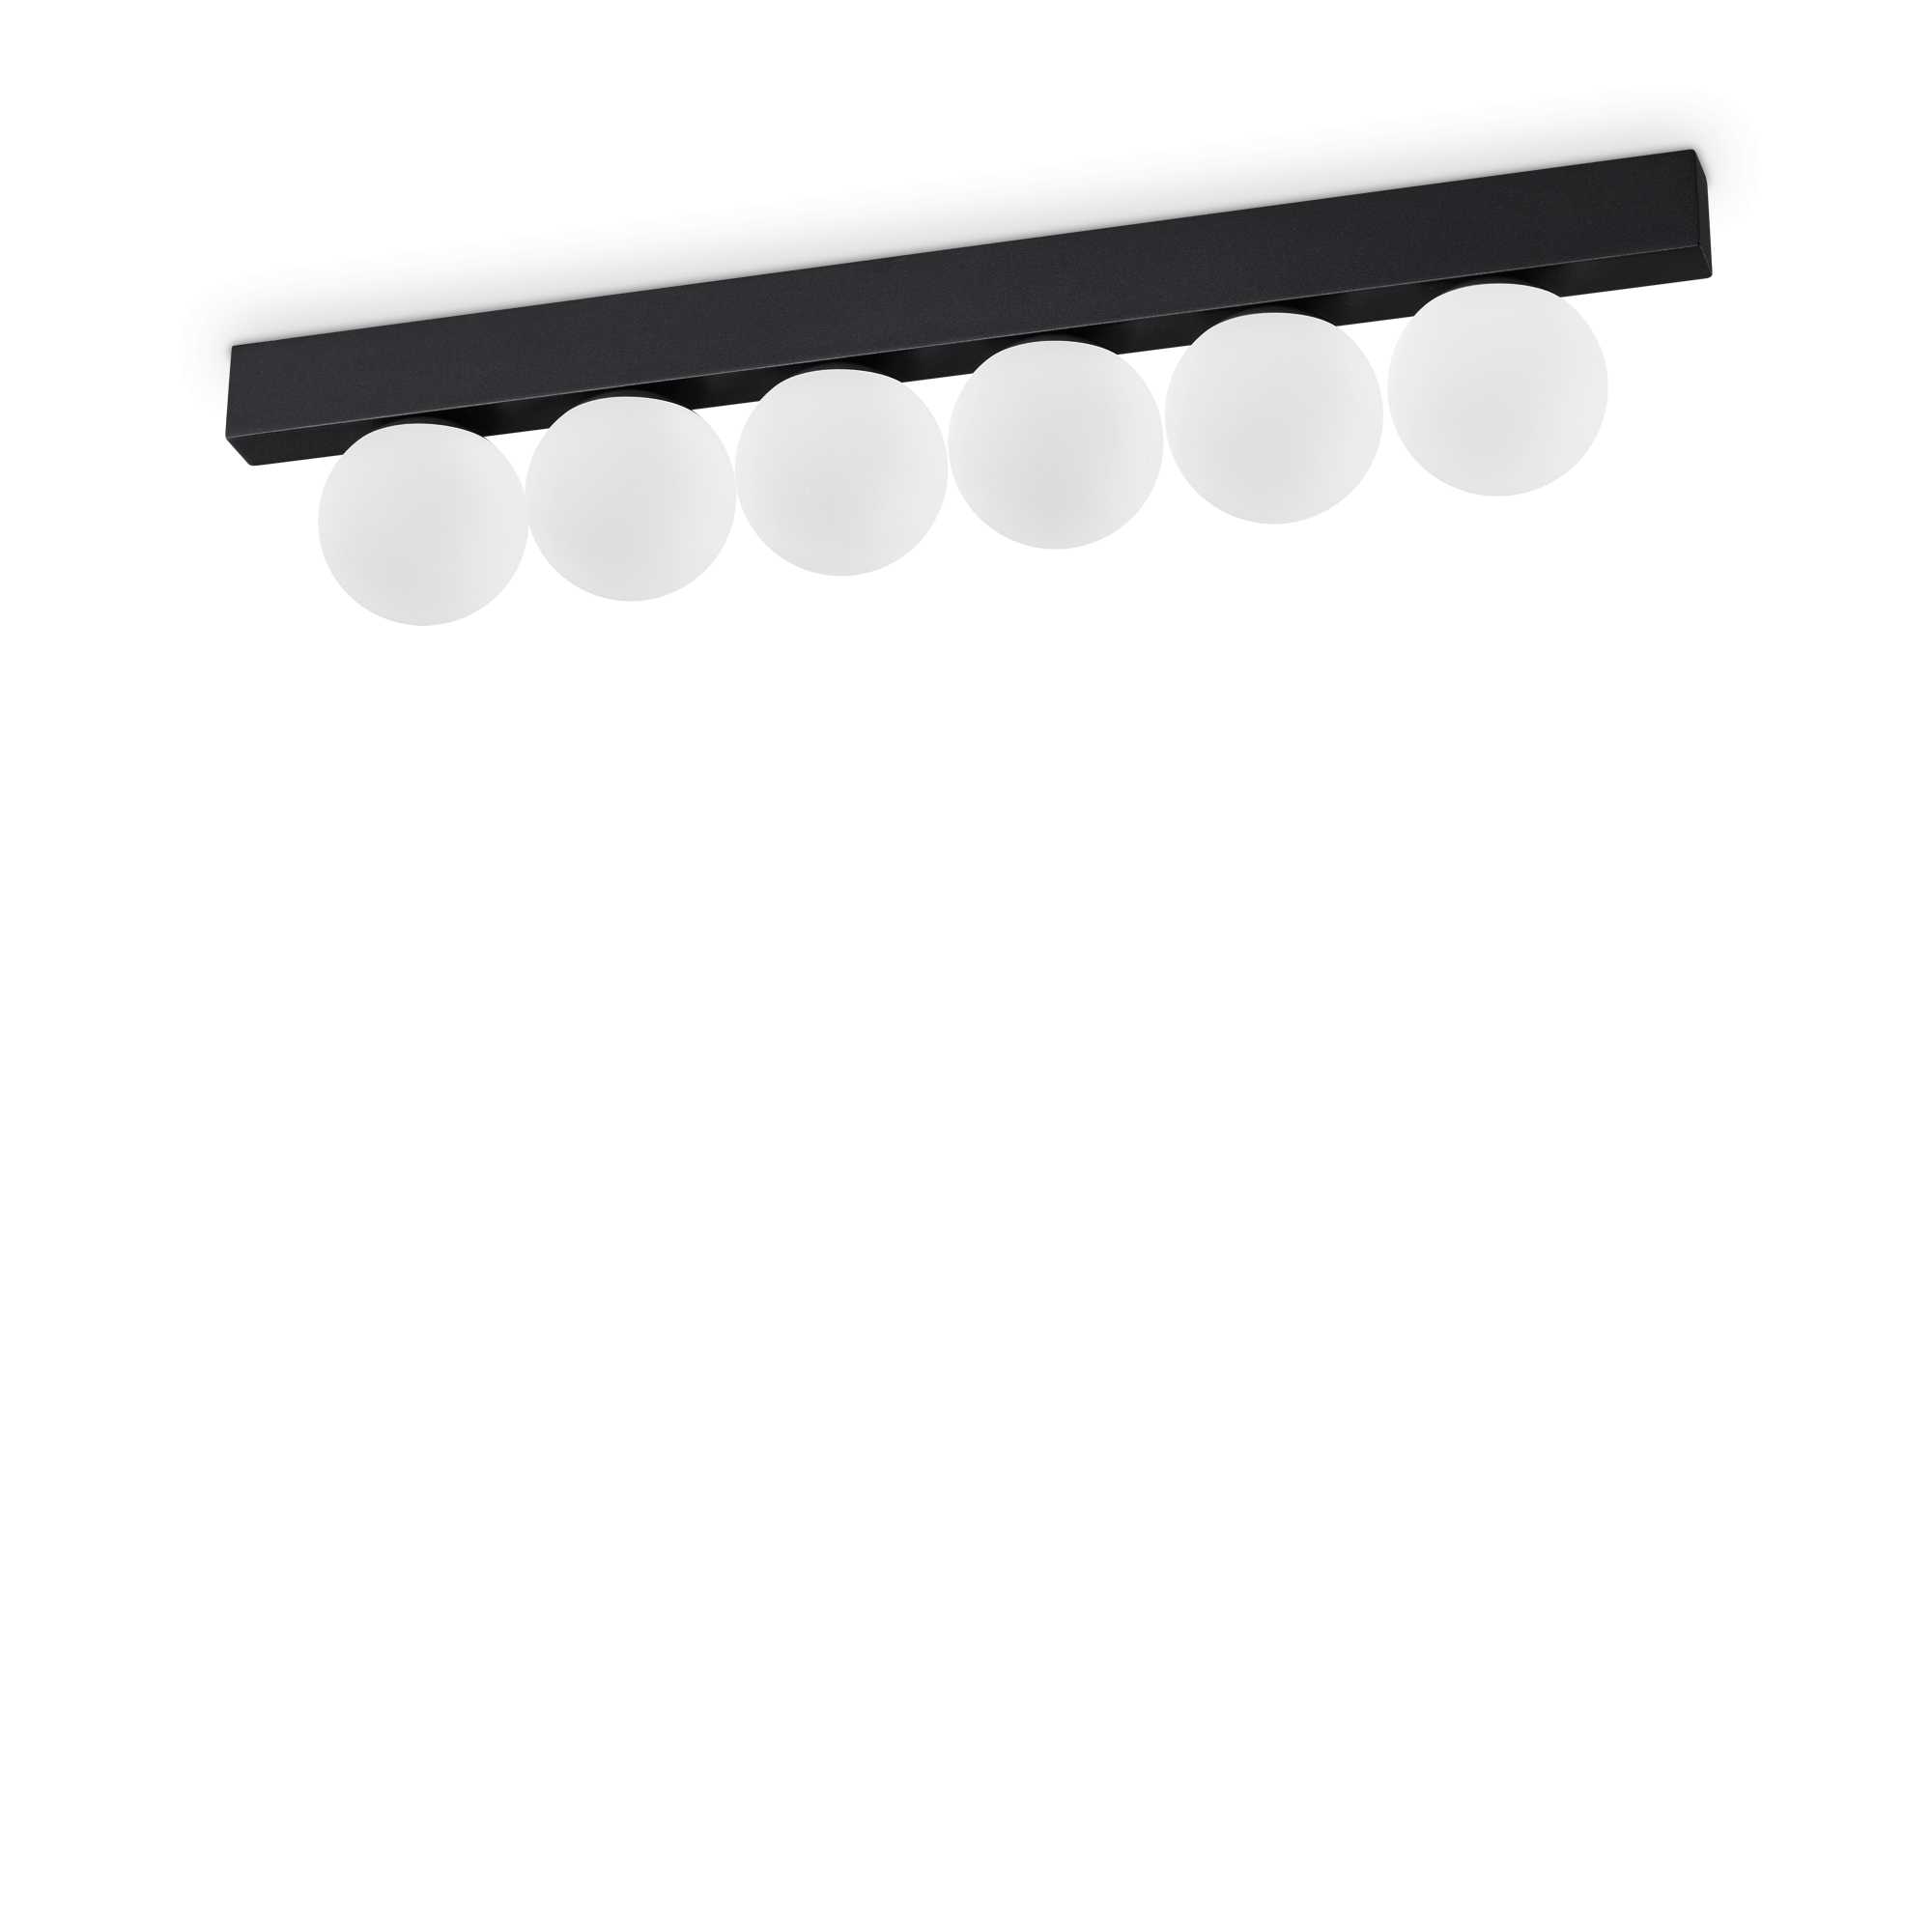 AD hotelska oprema Stropna lampa Ping pong pl6- Crno slika proizvoda